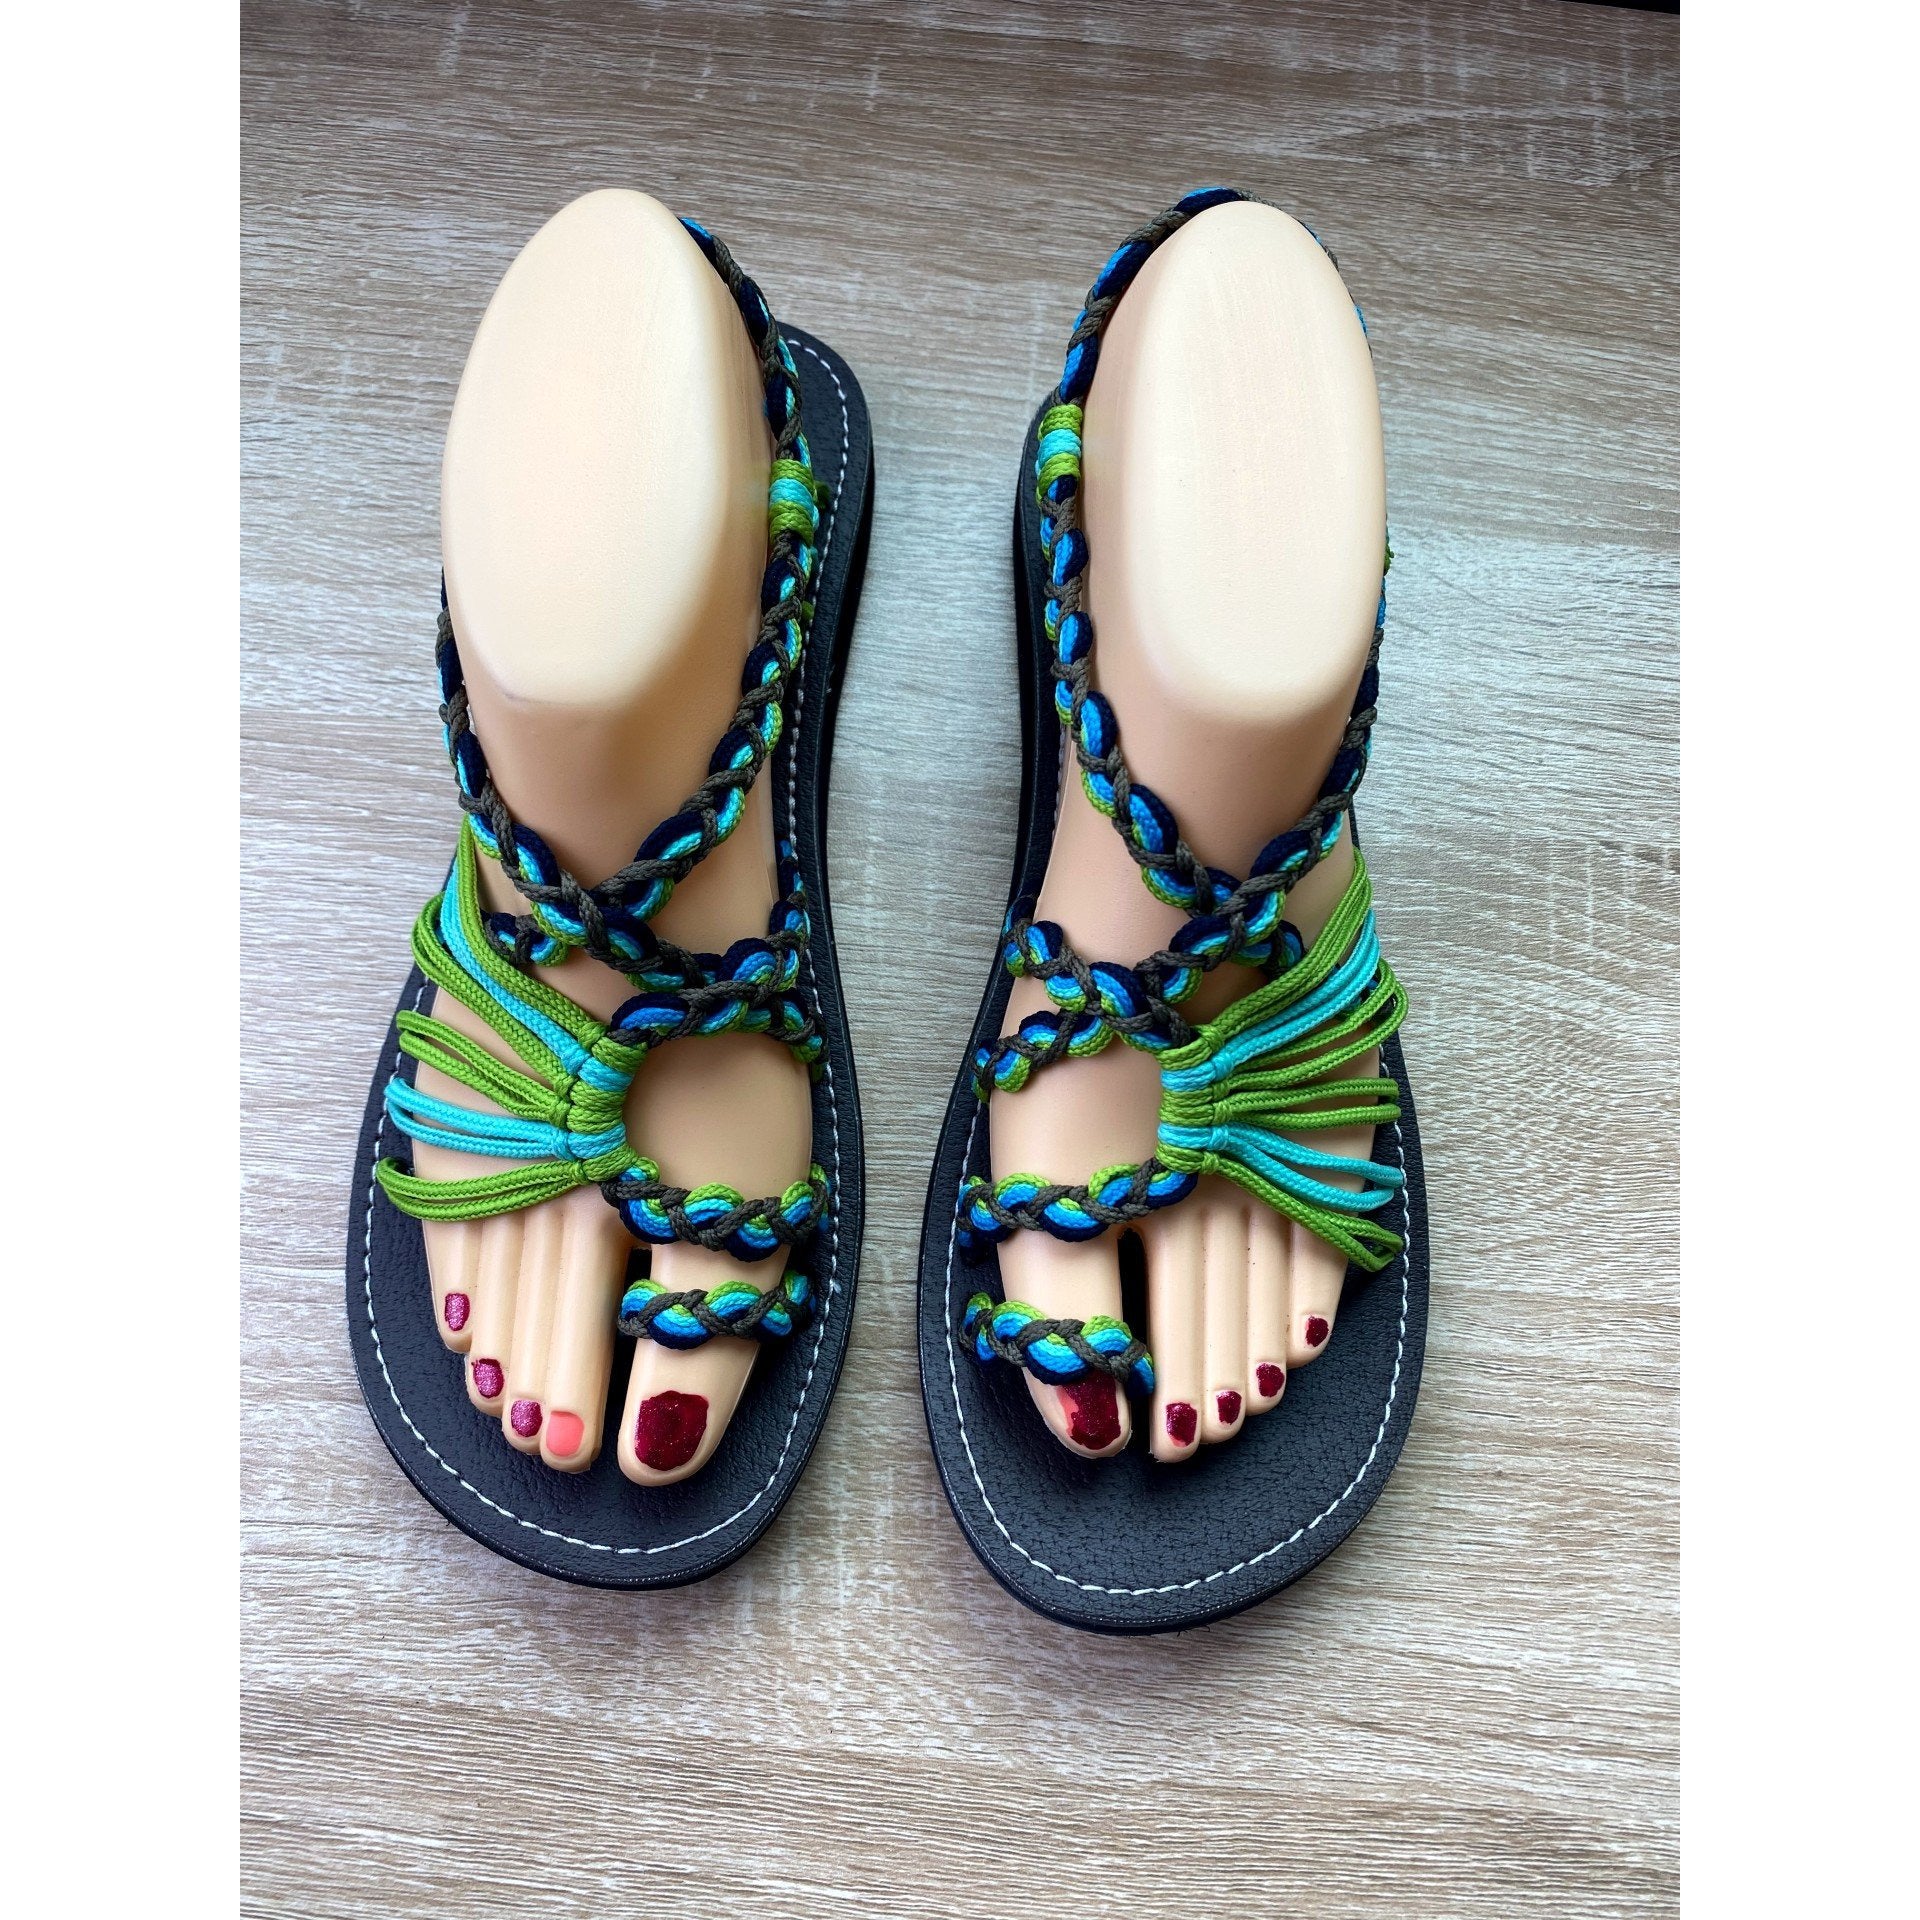 Shoes - Braided Sandals BL/GR/LBL